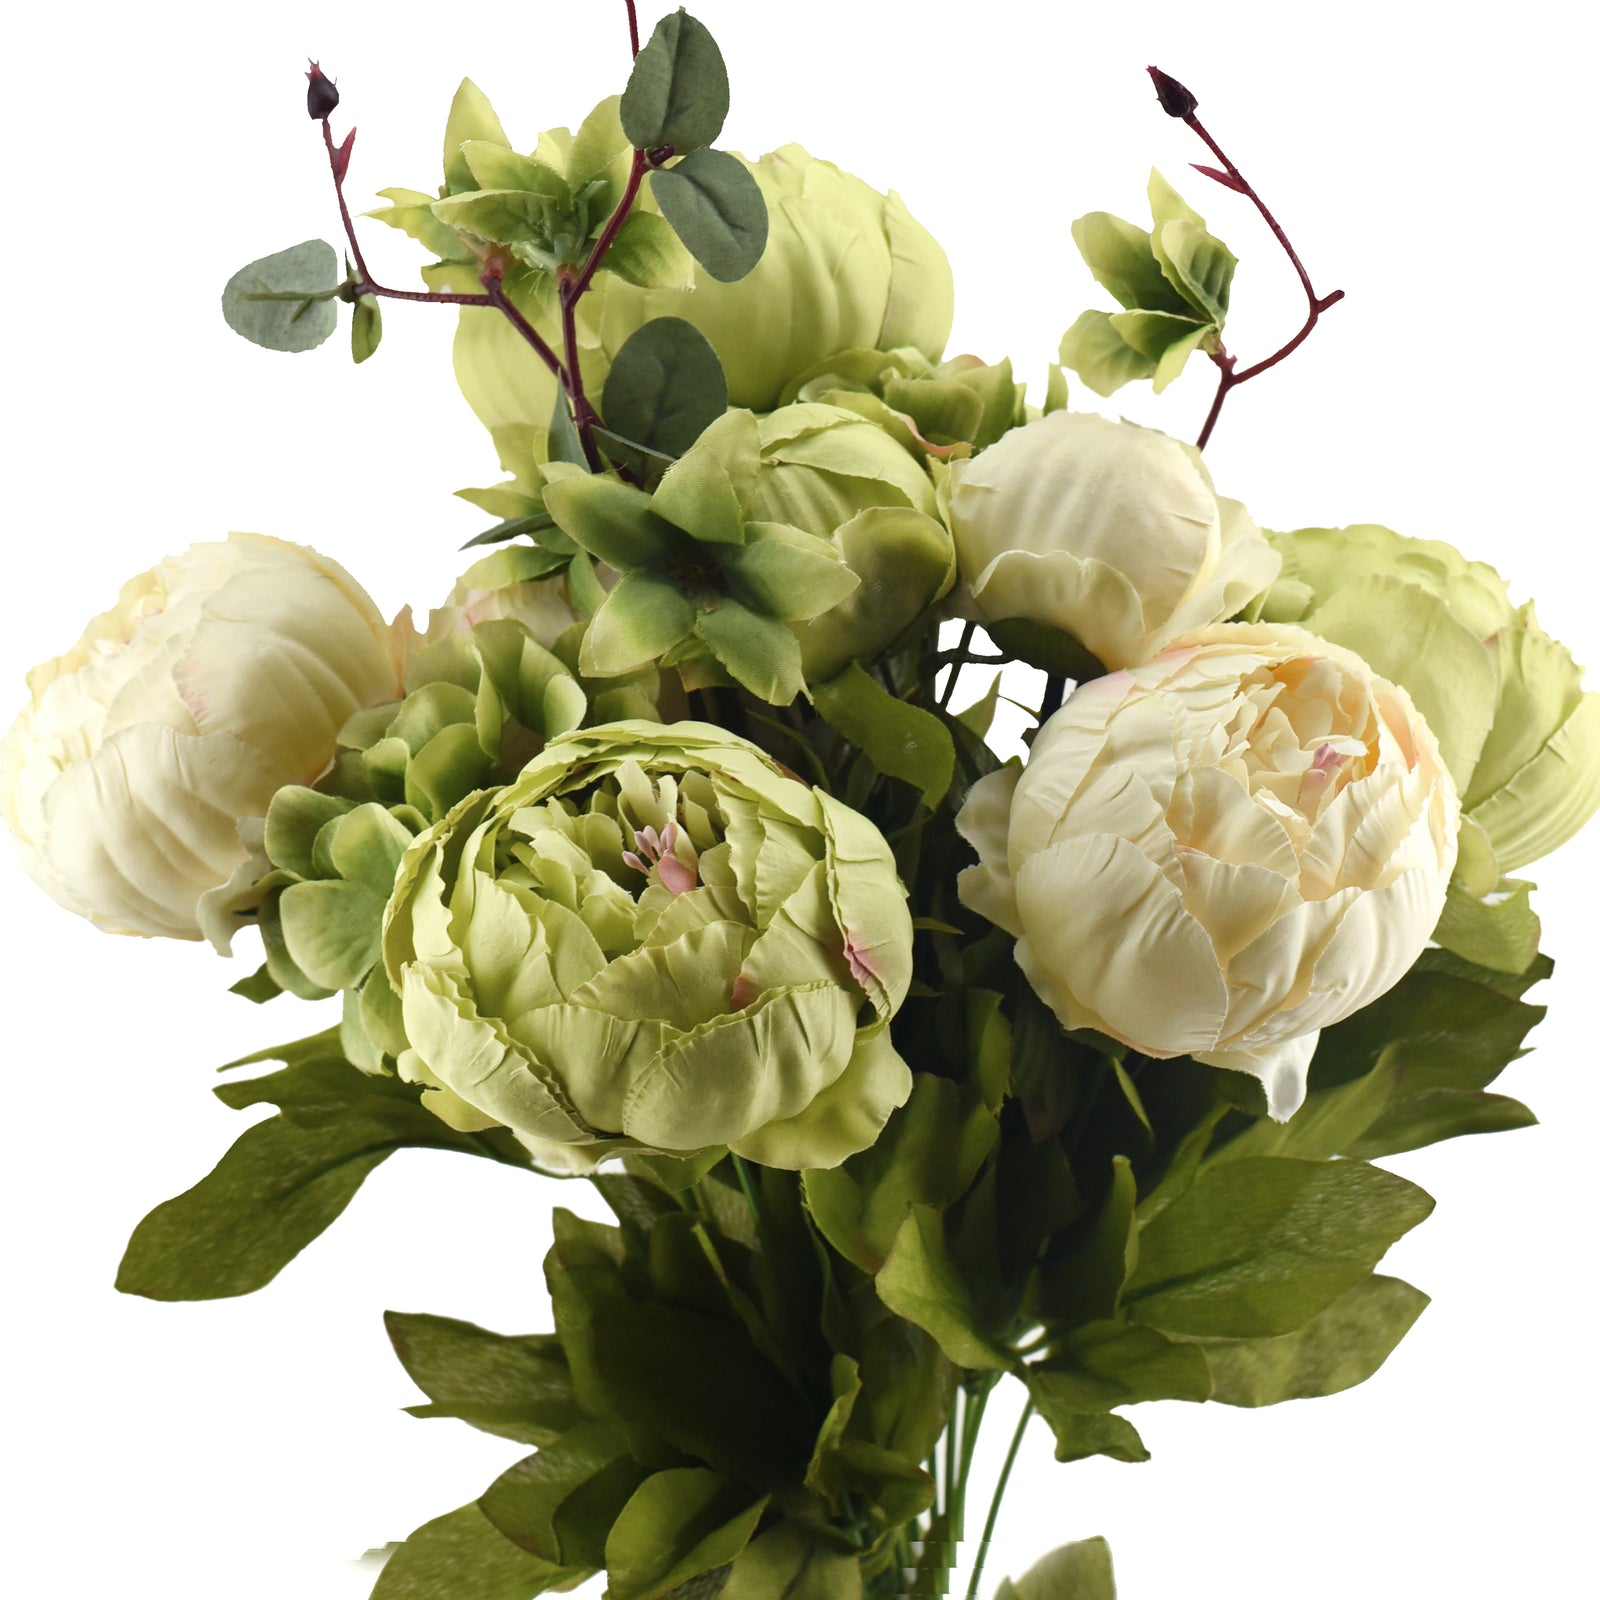 FiveSeasonStuff 2 Bundles (Spring Waltz) Peonies Artificial Flower Bouquet